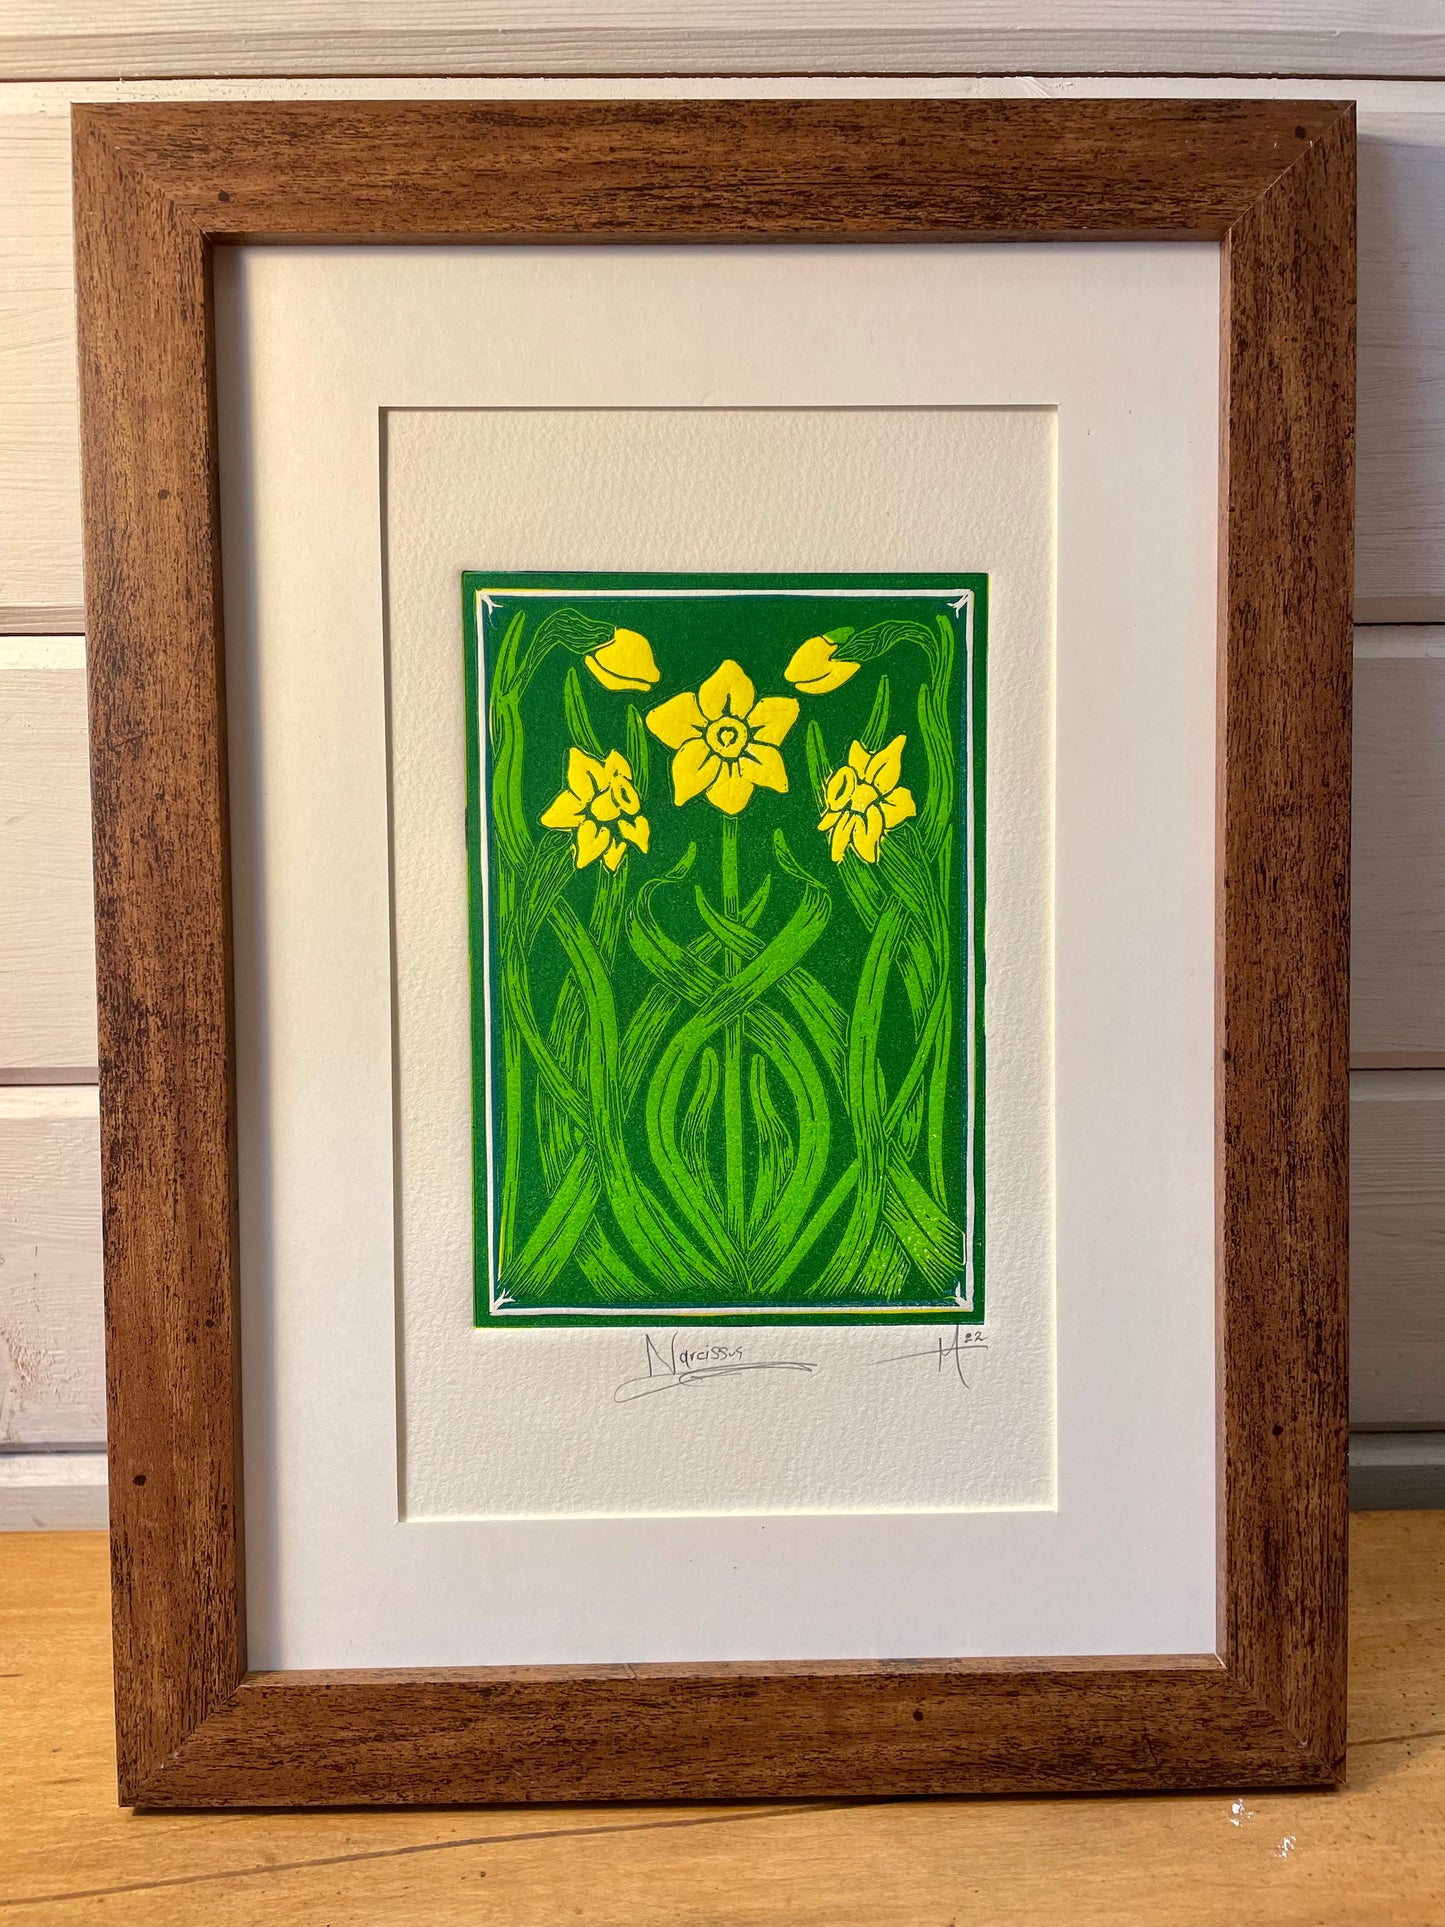 Narcissus Daffodil Linocut Print